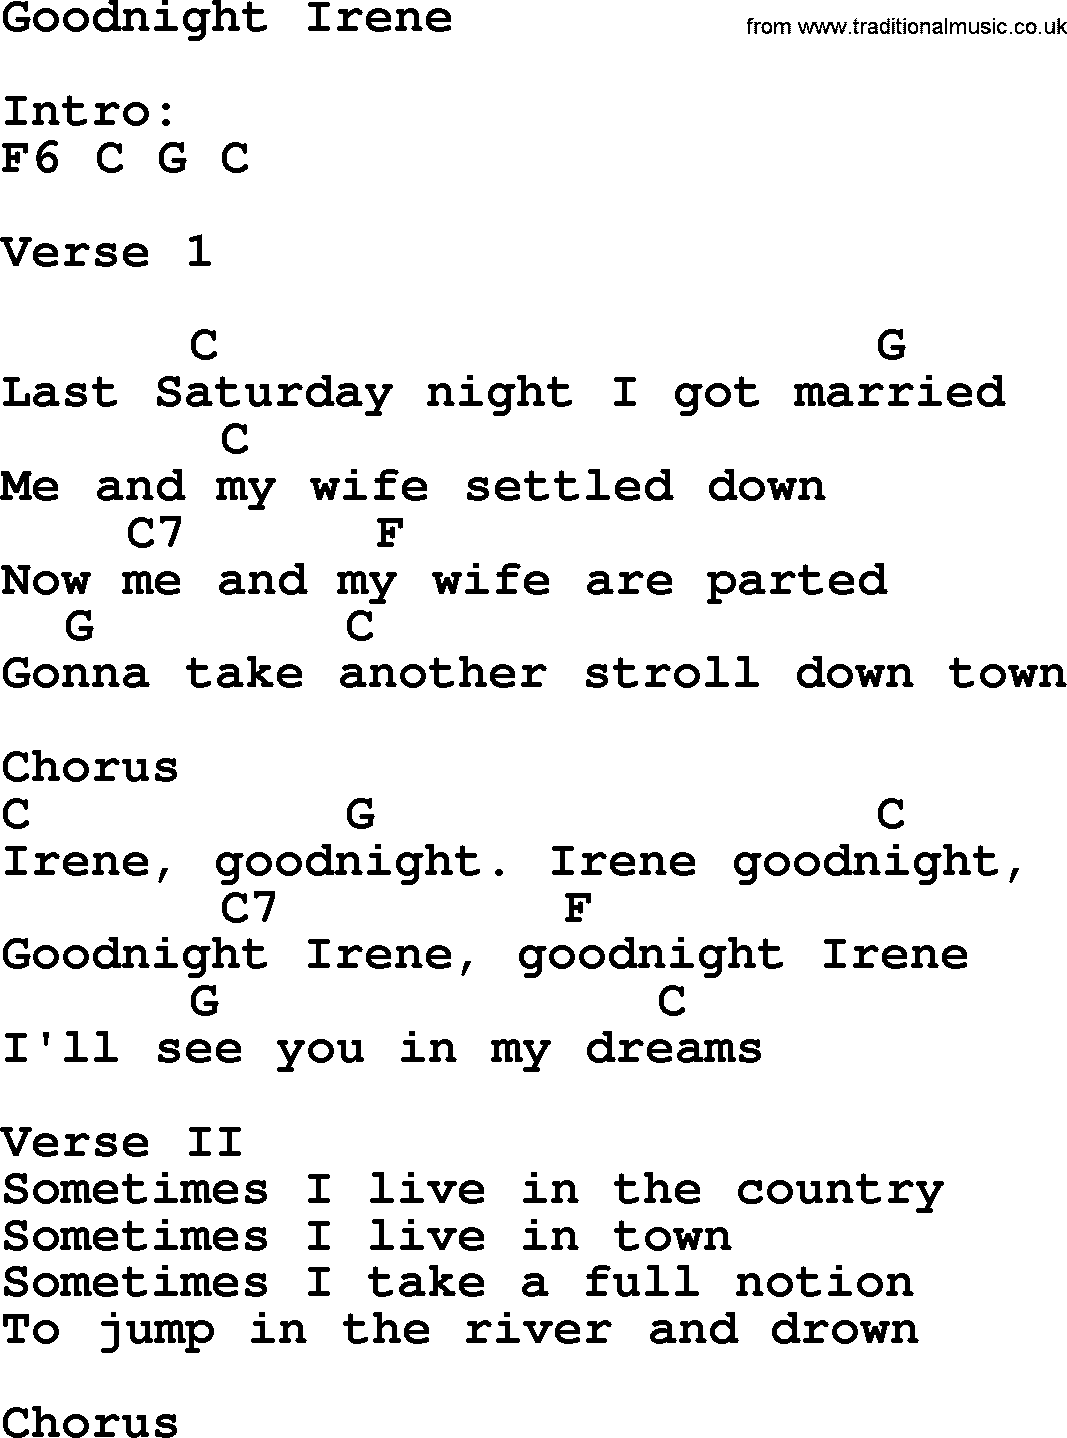 Johnny Cash song Goodnight Irene, lyrics and chords